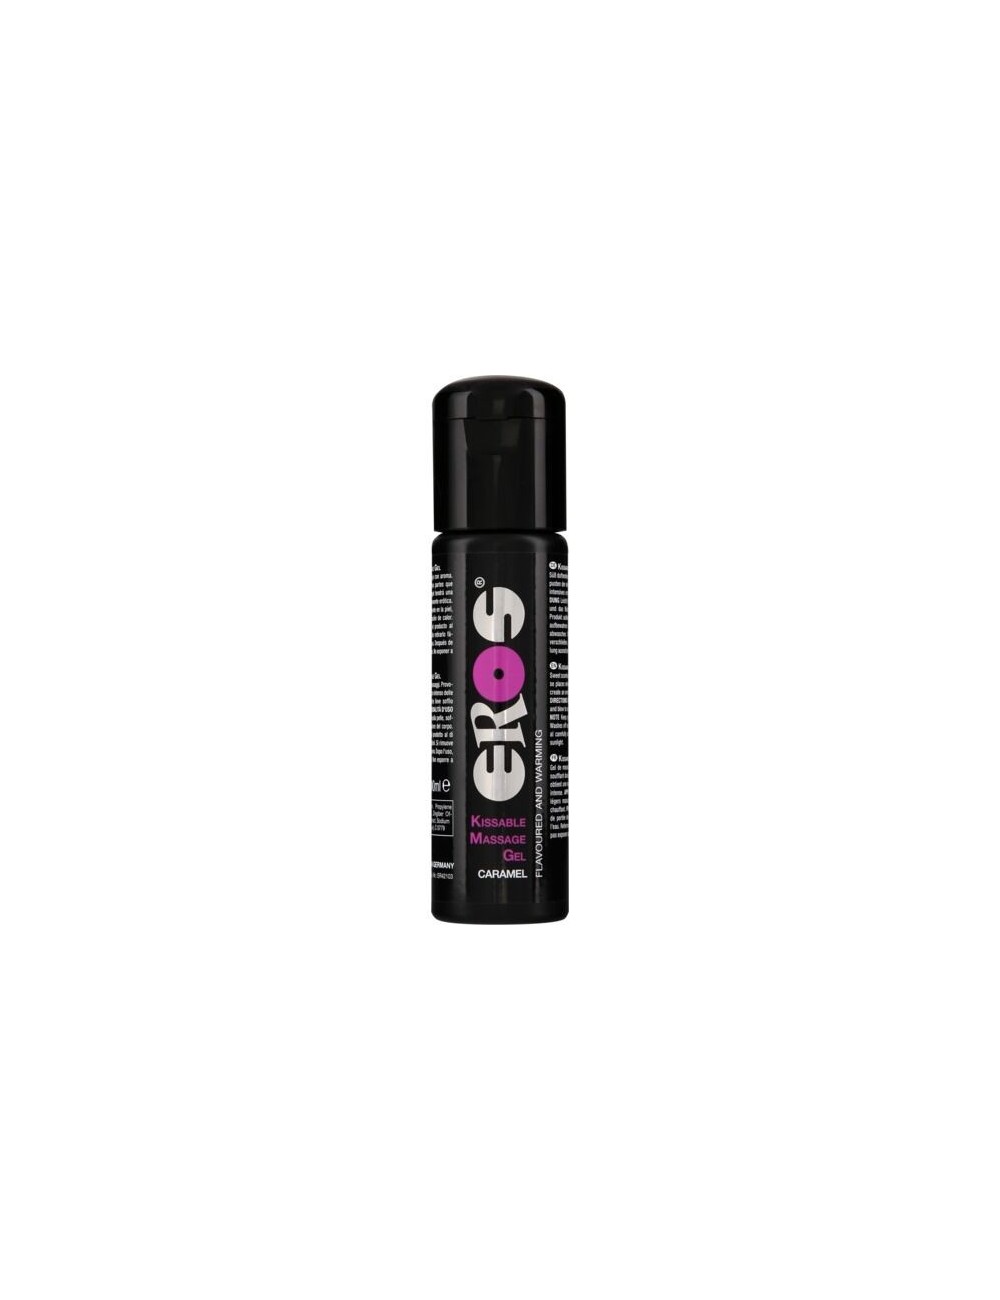 Eros kissable massage gel chauffant caramel 100 ml - Huiles de massage - Eros Classic Line